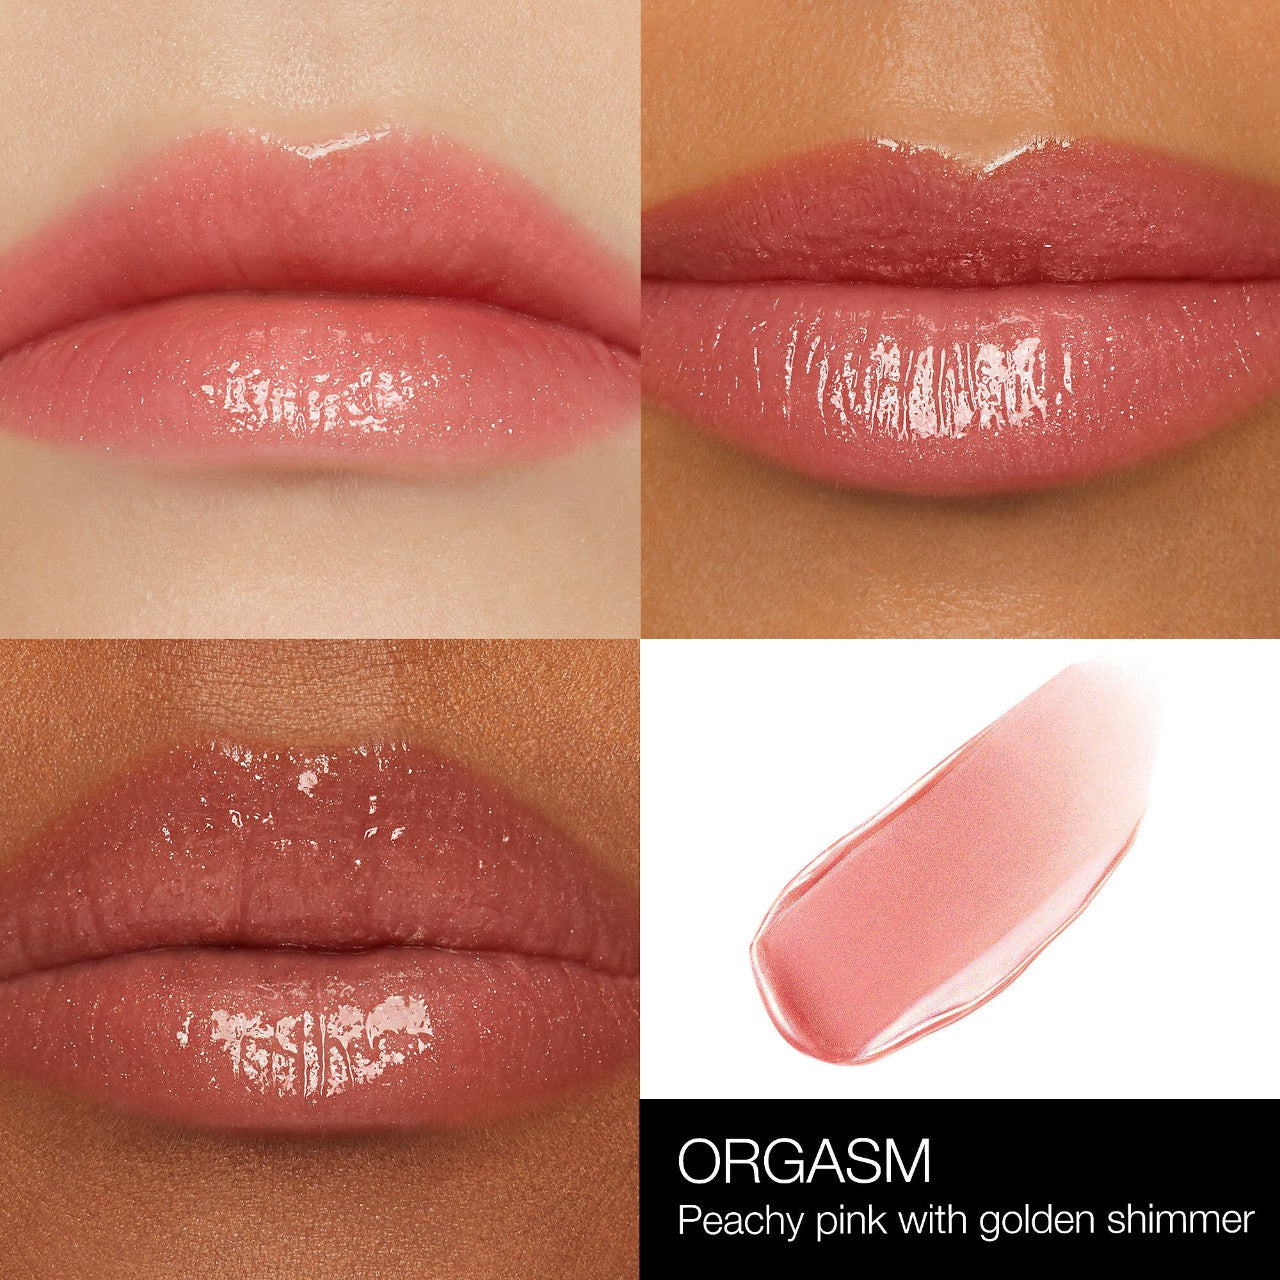 NARS - Mini Orgasm Blush and Lip Gloss Duo Set